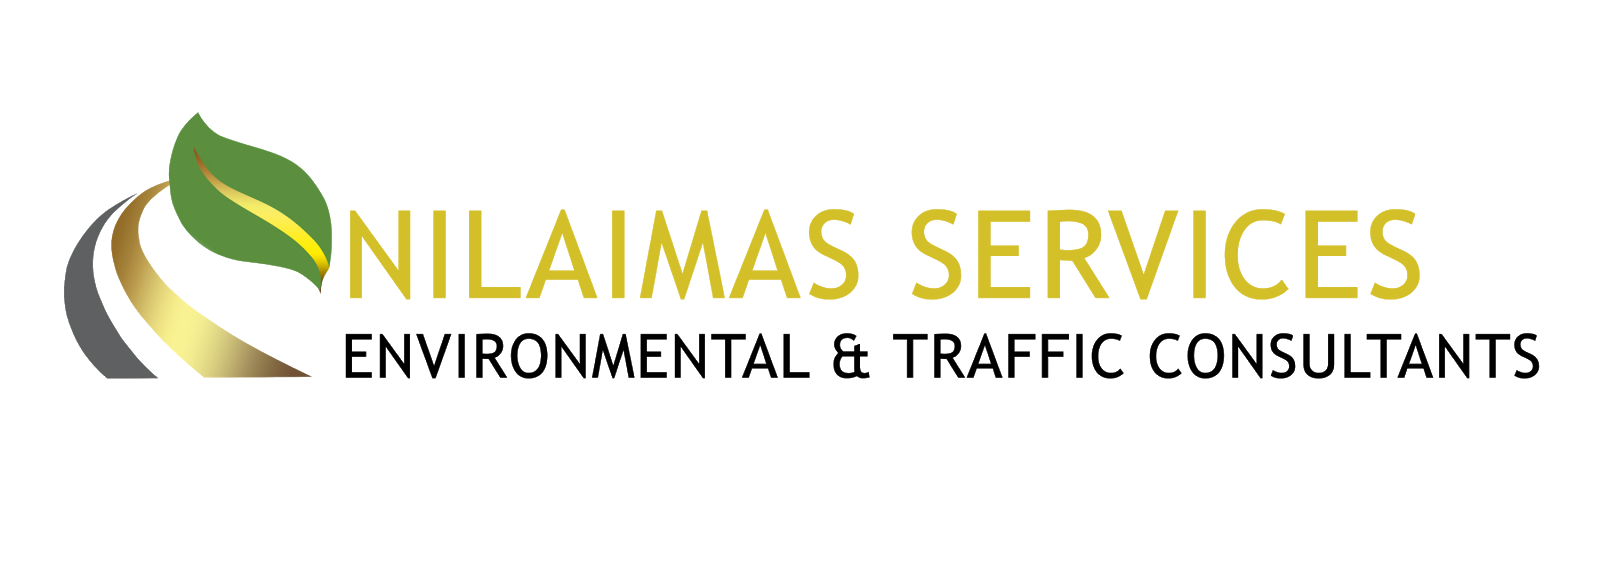 NILAIMAS SERVICES (TIA, TMP, EIA, ESCP, SIA CONSULTANT )  REGISTERED WITH  MOF & DOE OF MALAYSIA